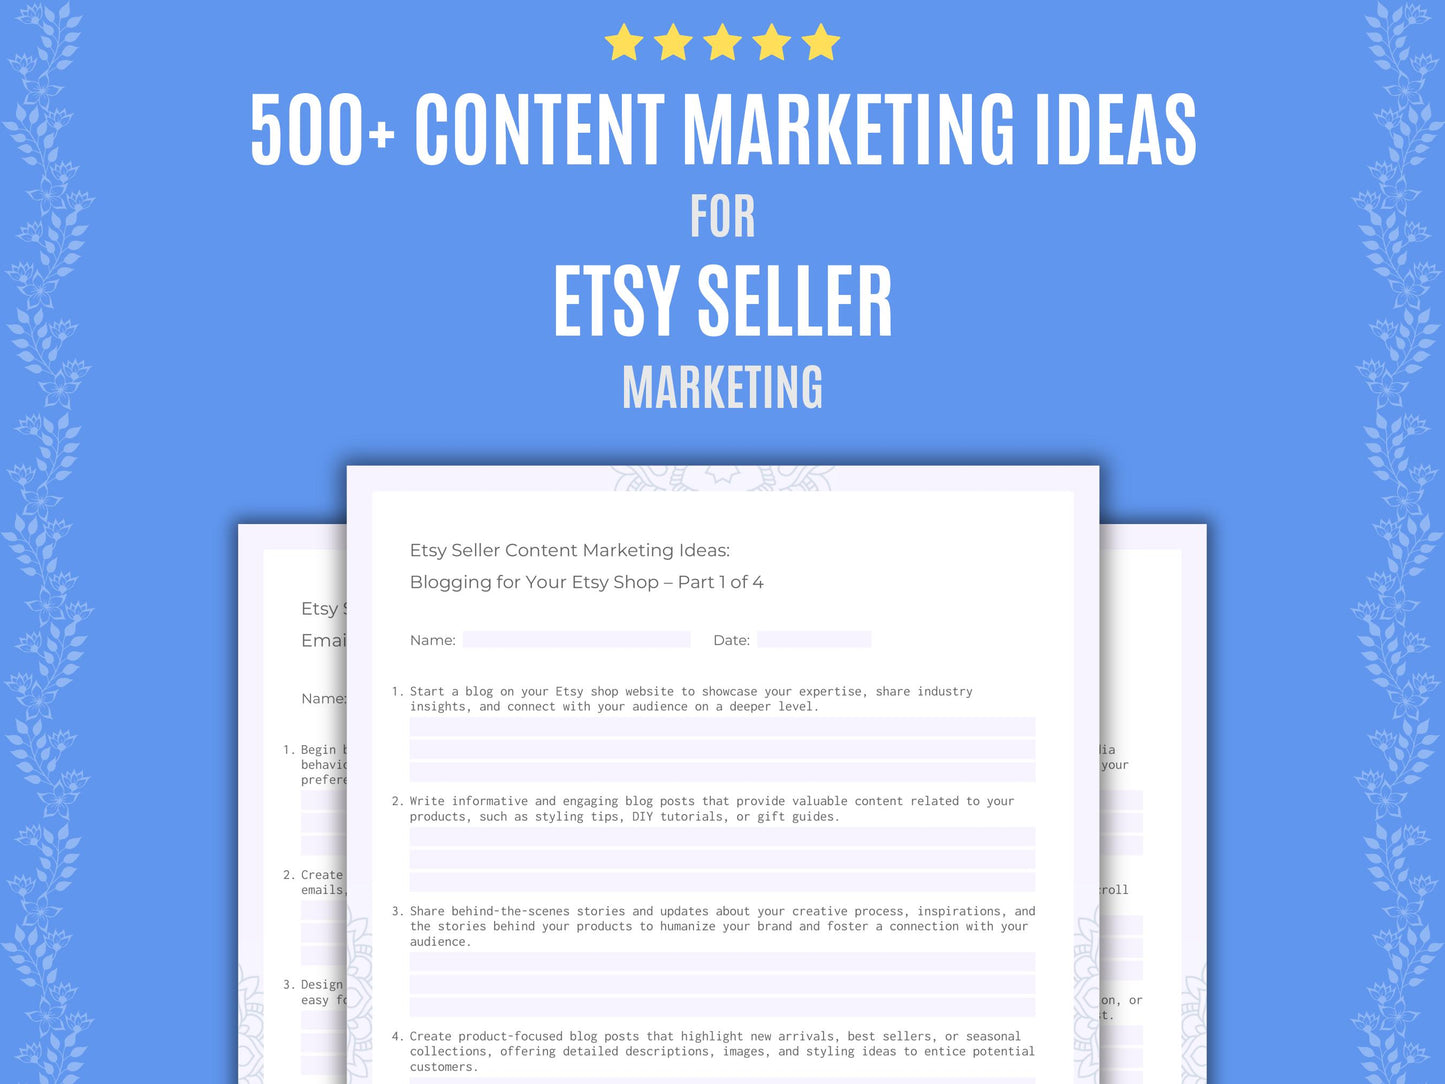 Etsy Seller Content Marketing Ideas